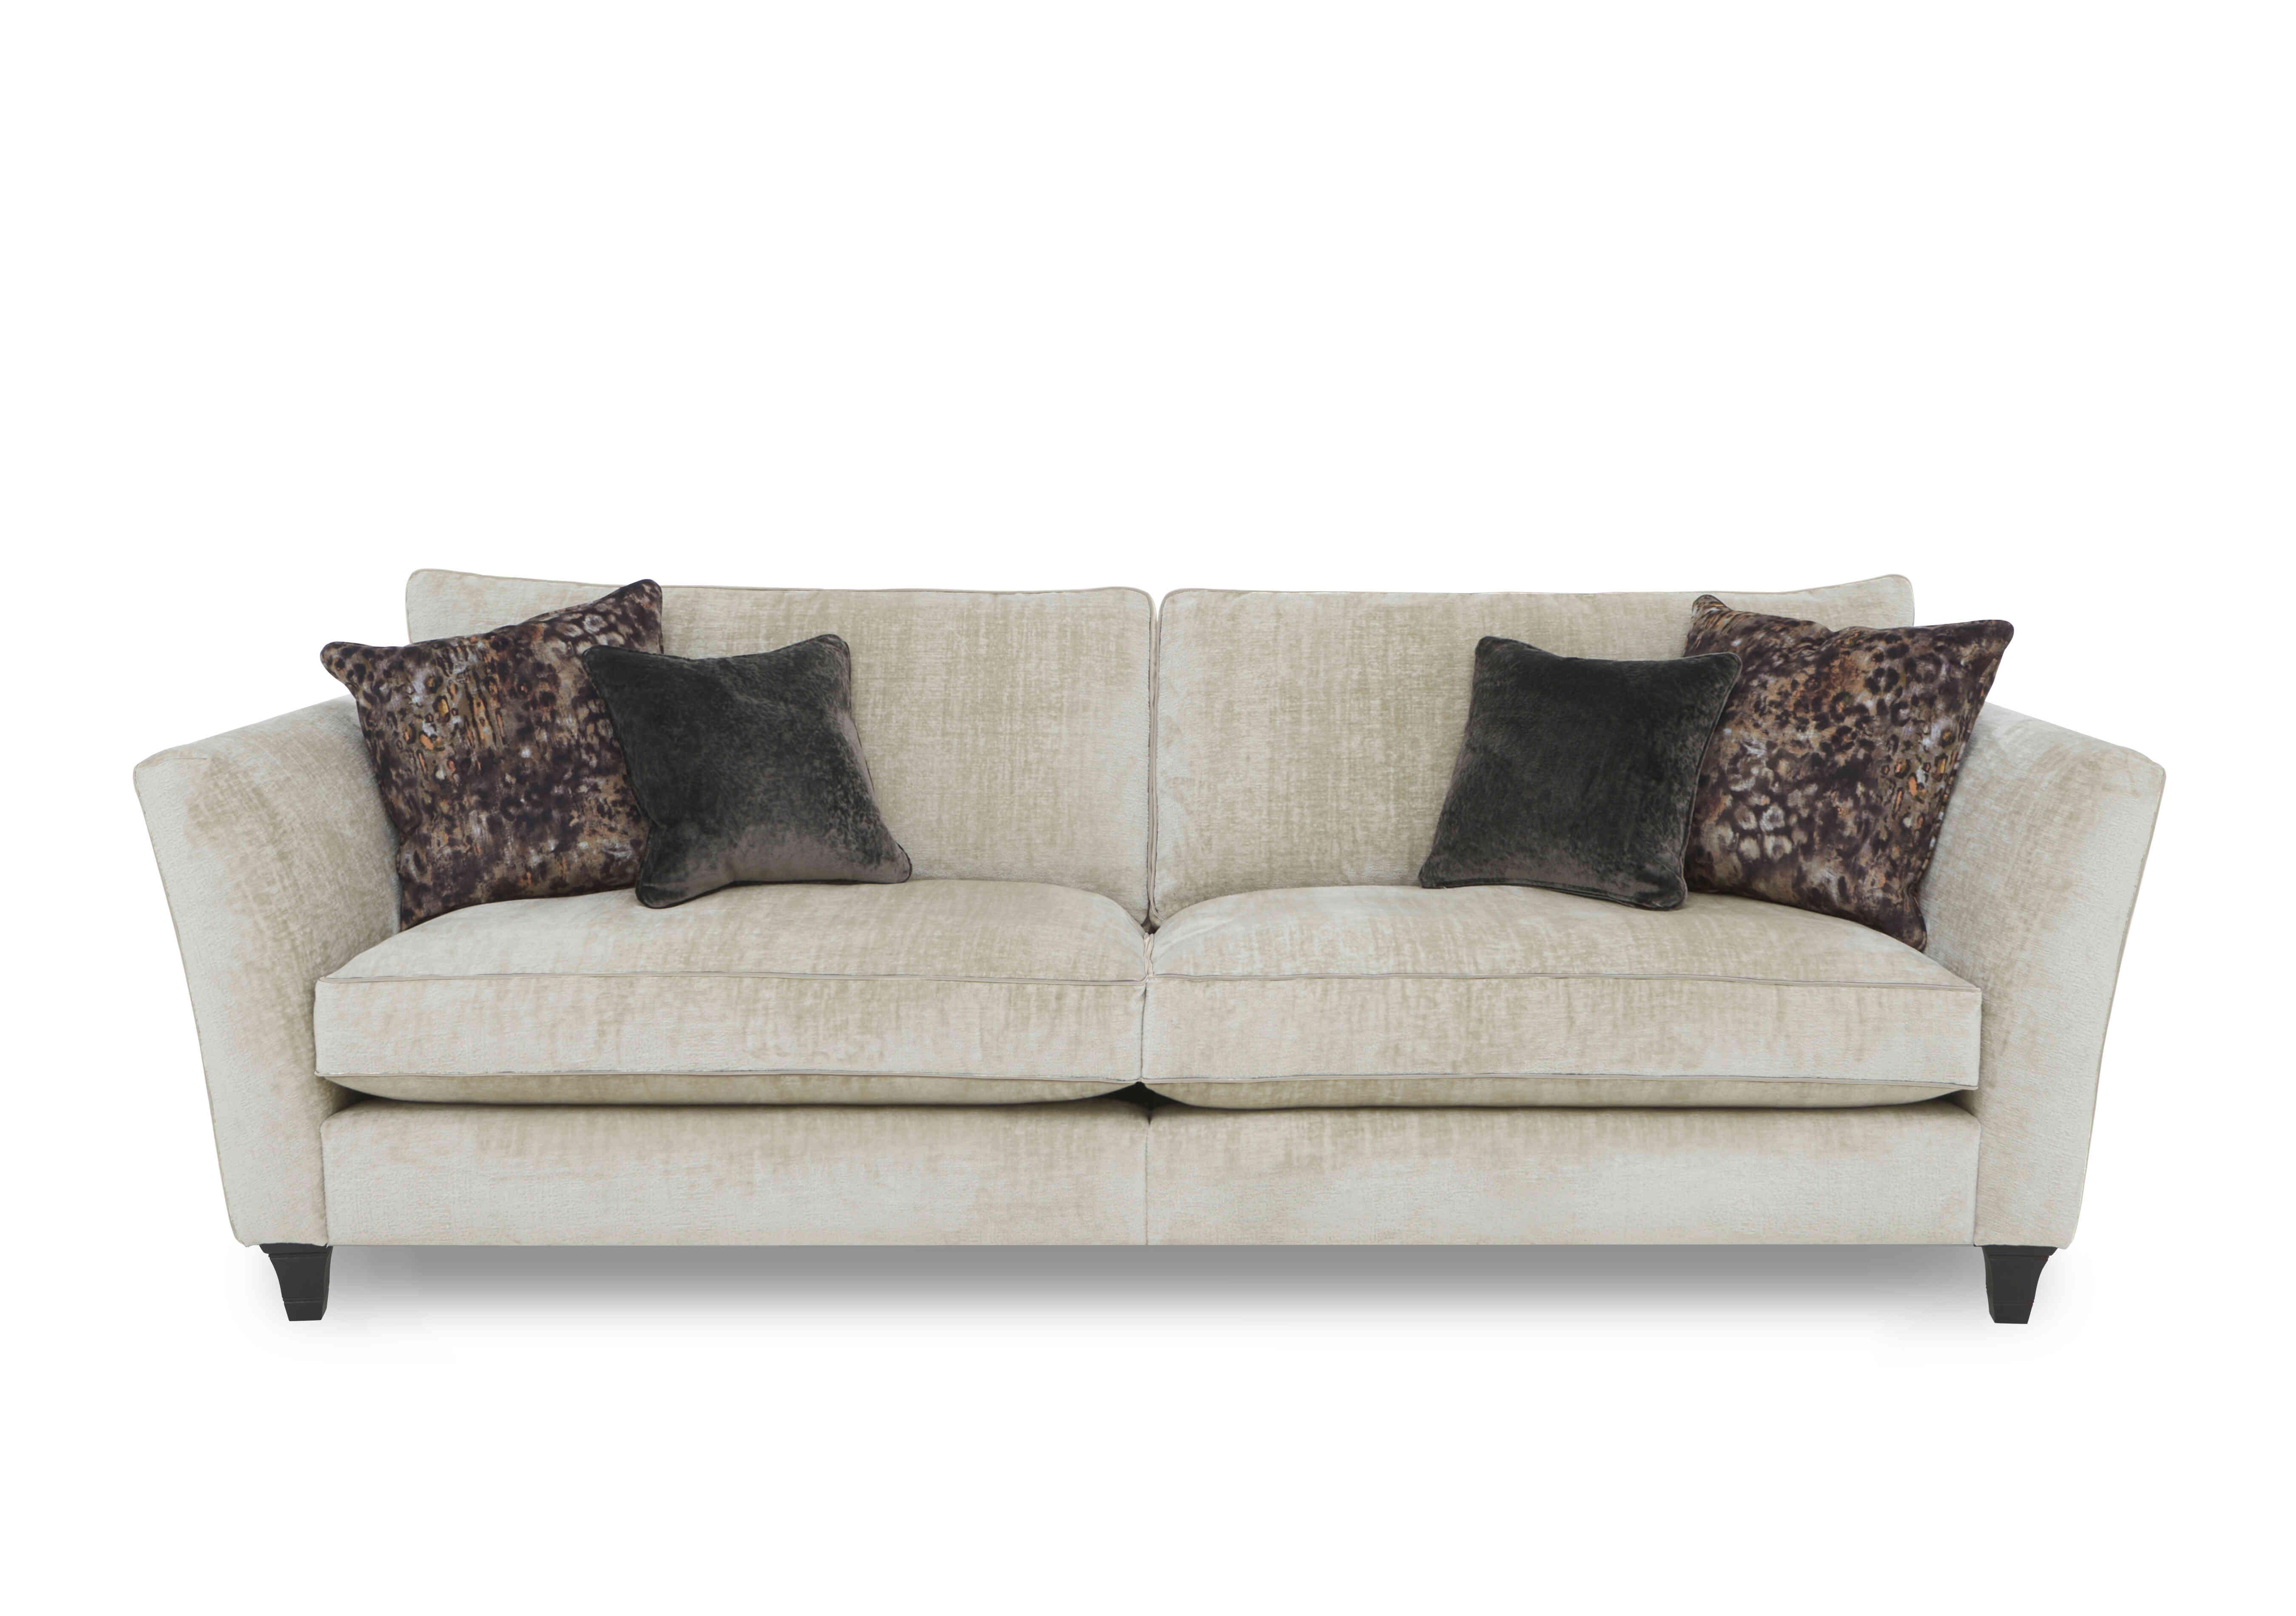 Modern Classics Victoria Park 4 Seater Split Frame Sofa in Remini Pebble Sp Mf on Furniture Village